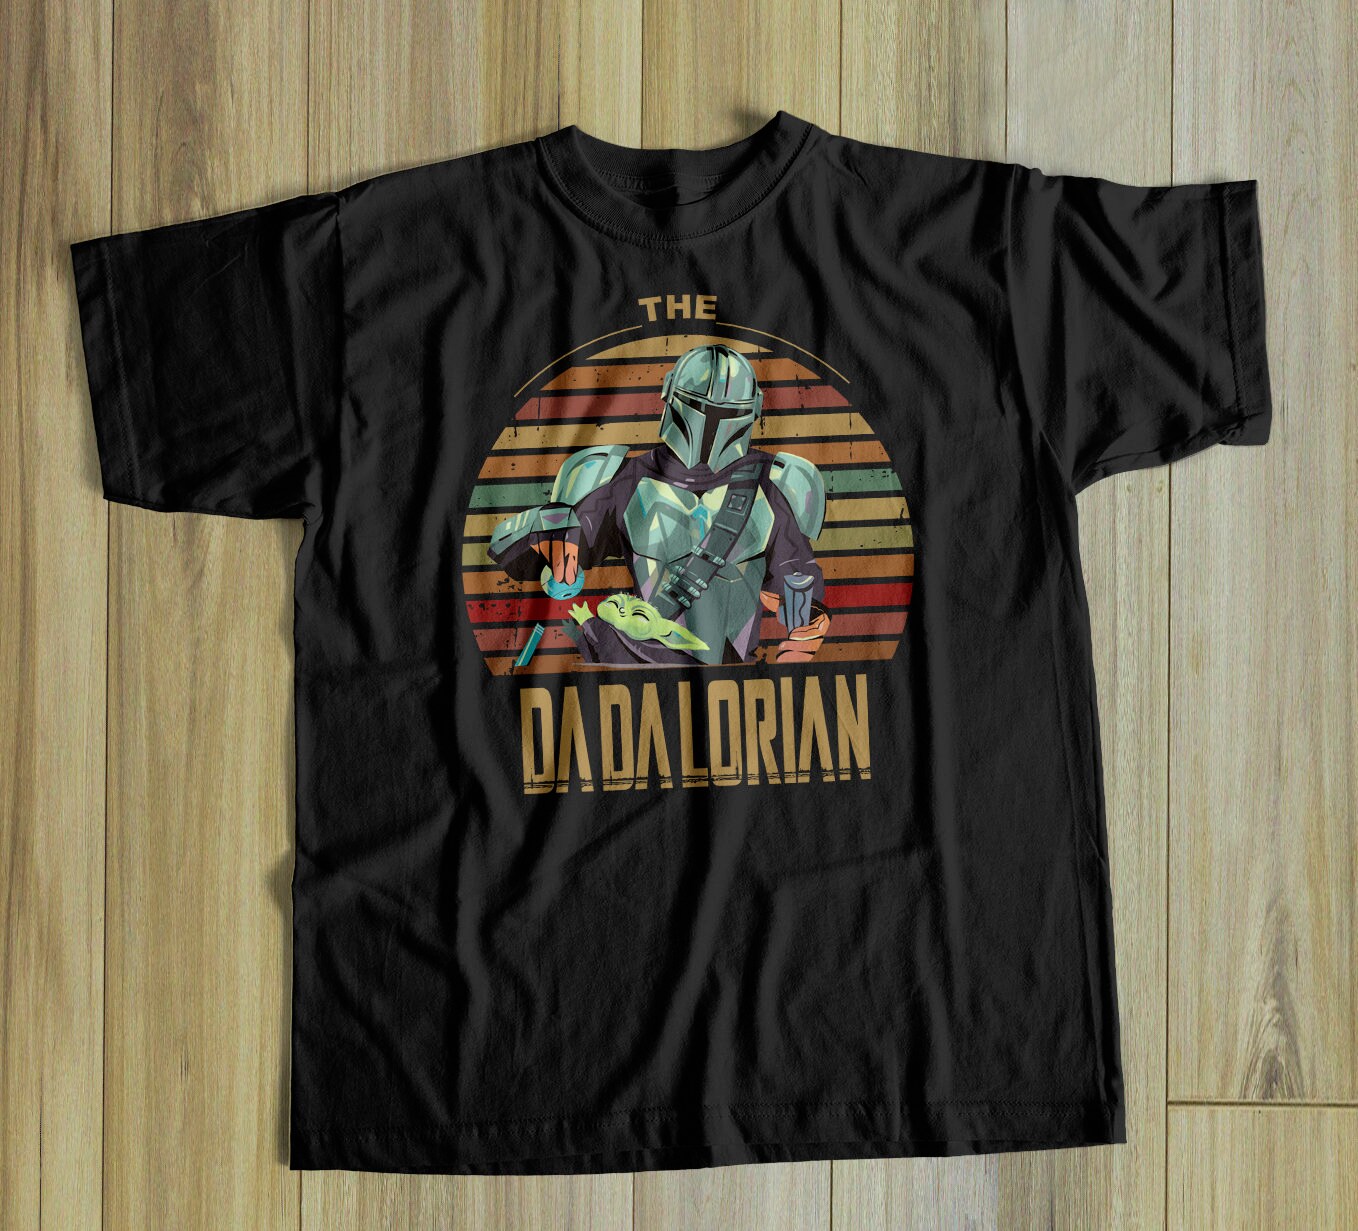 The-dadalorian-shirt-mandalorian-shirt-fathers-day-gift-gift-for-dad-fathers-day-shirts-dad-superhero-shirt-star-wars-shirtdaddy-iw8fs